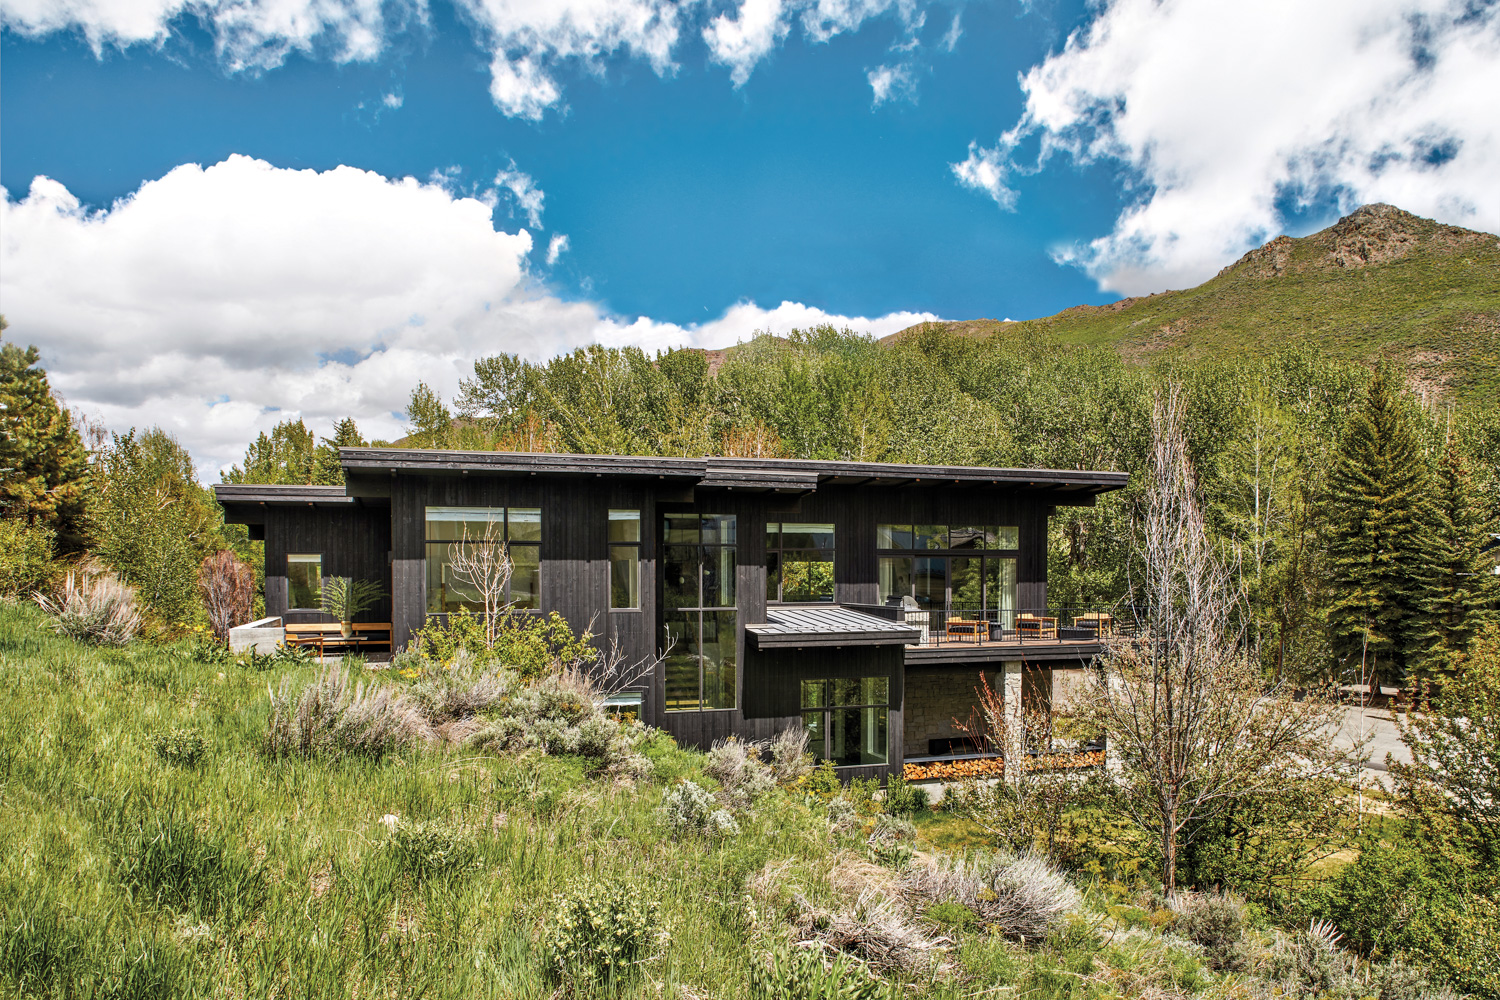 An Edgy Black Exterior Inspires The Design Of A Modern Mountain Home